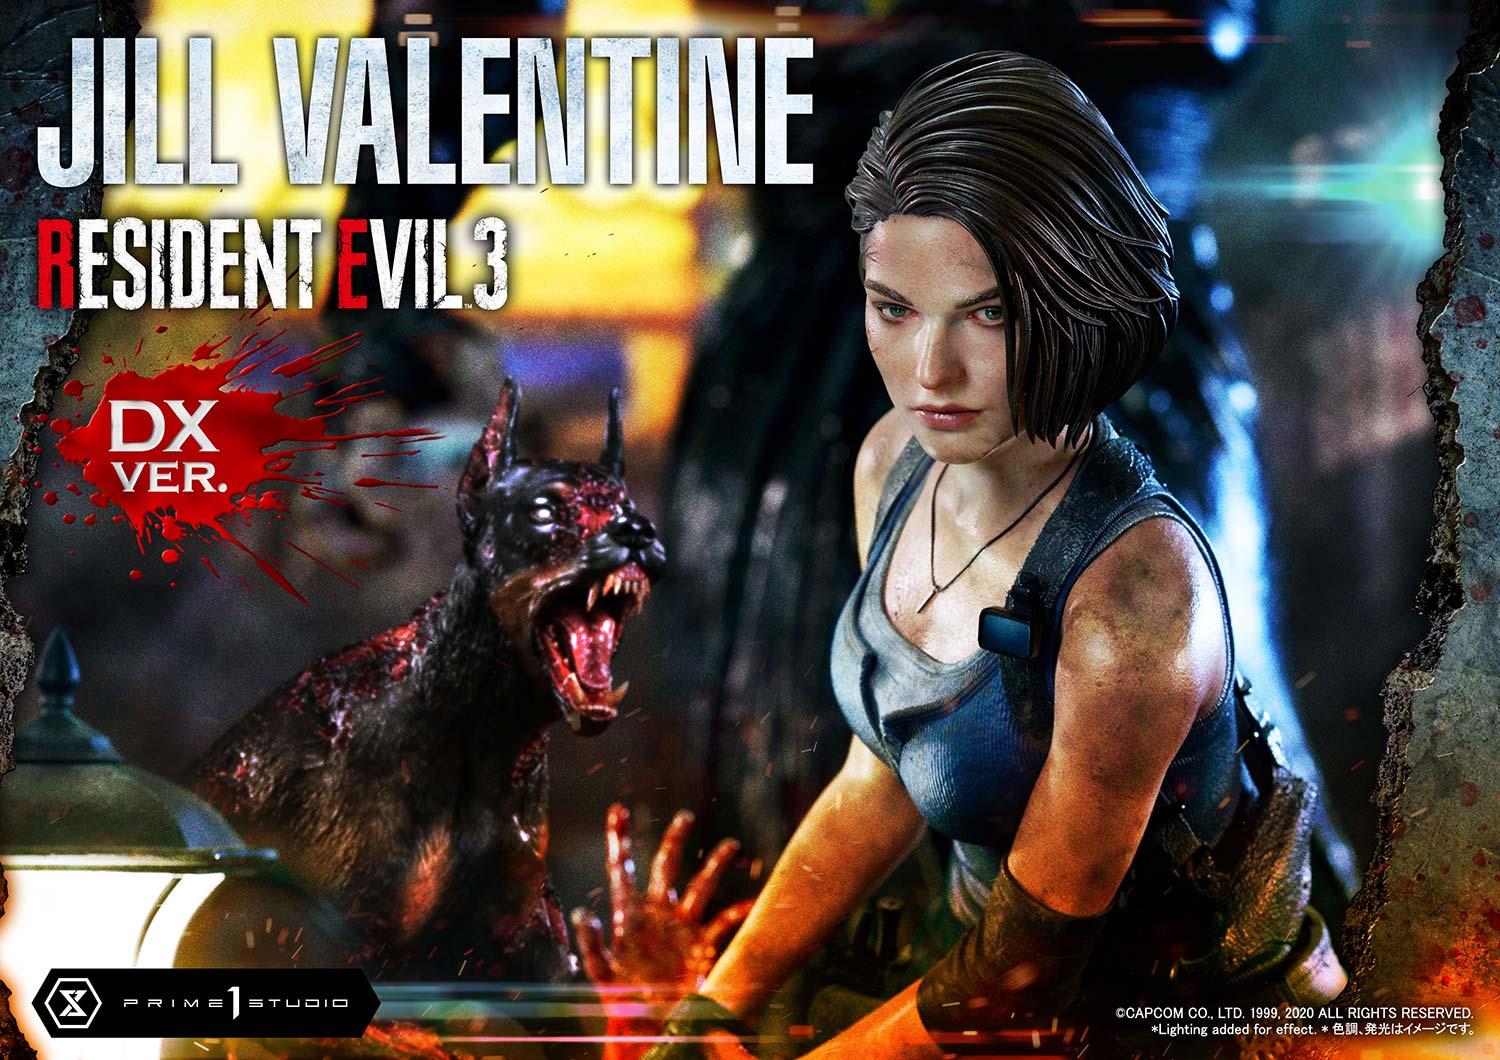 Ultimate Premium Masterline Resident Evil 3 Jill Valentine Deluxe